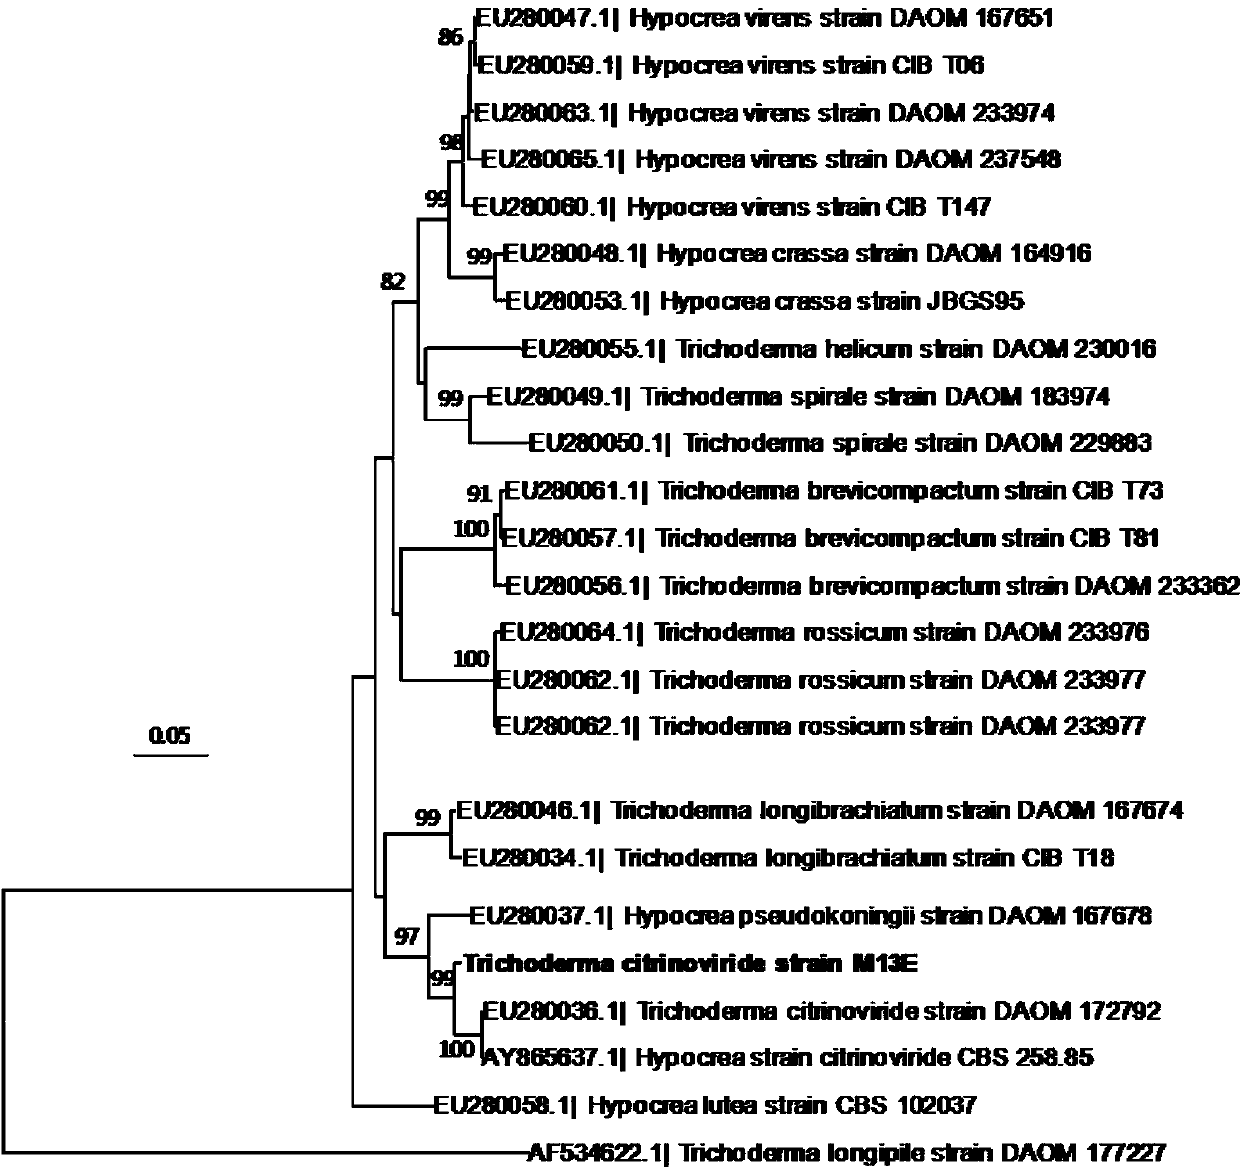 Trichoderma citrinoviride M-13 and application thereof